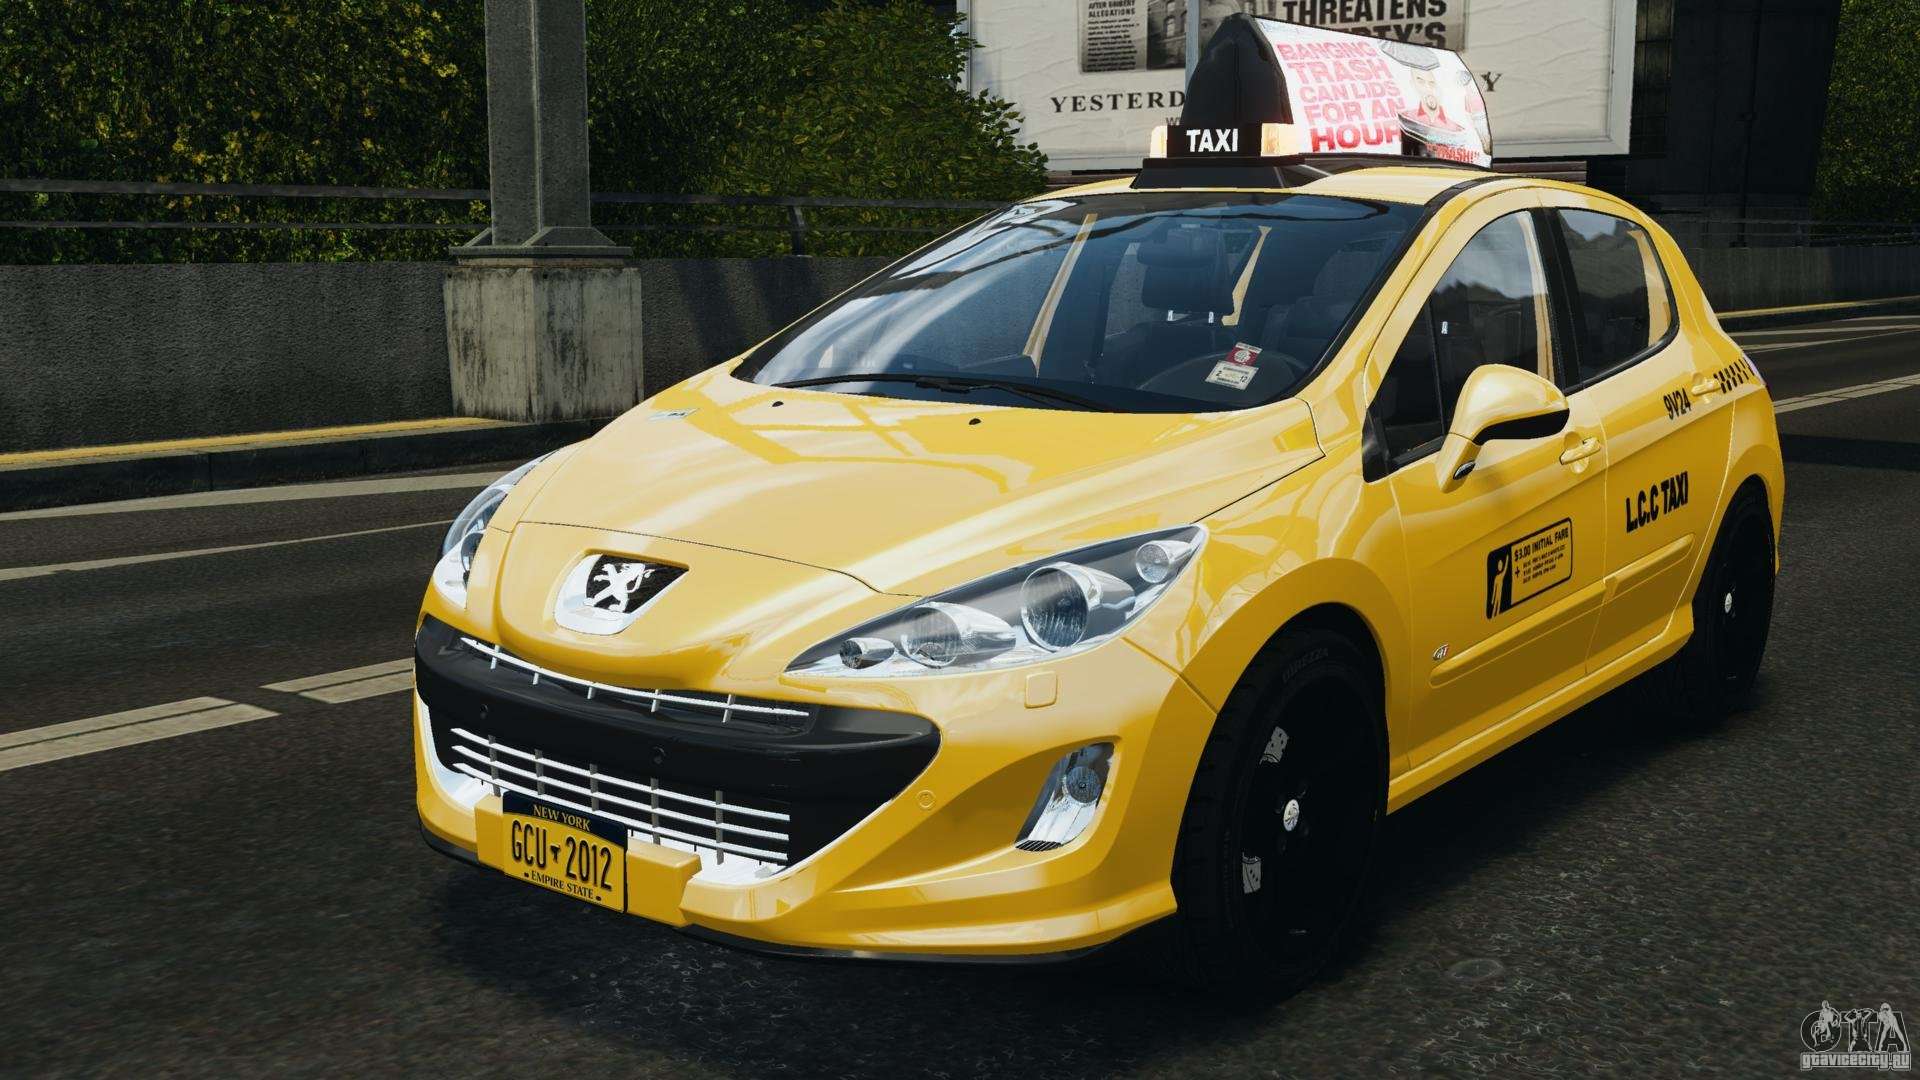 Peugeot taxi для gta 5 фото 92